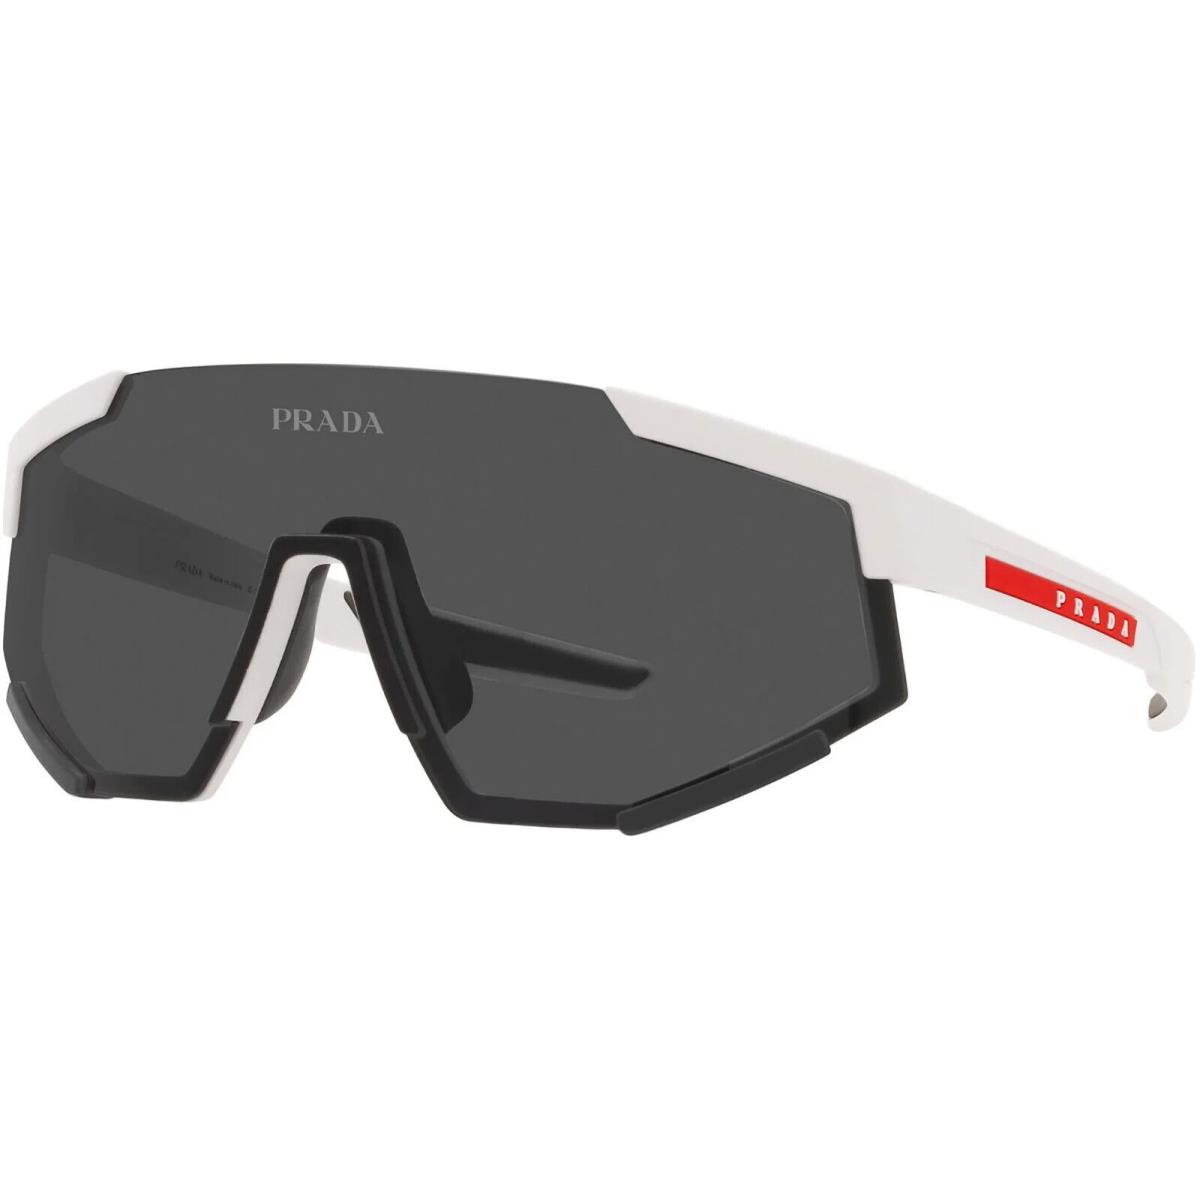 Prada Linea Rossa Sps 04WS Rubber White/dark Grey TWK-06F Sunglasses - Frame: Gray, Lens: Gray